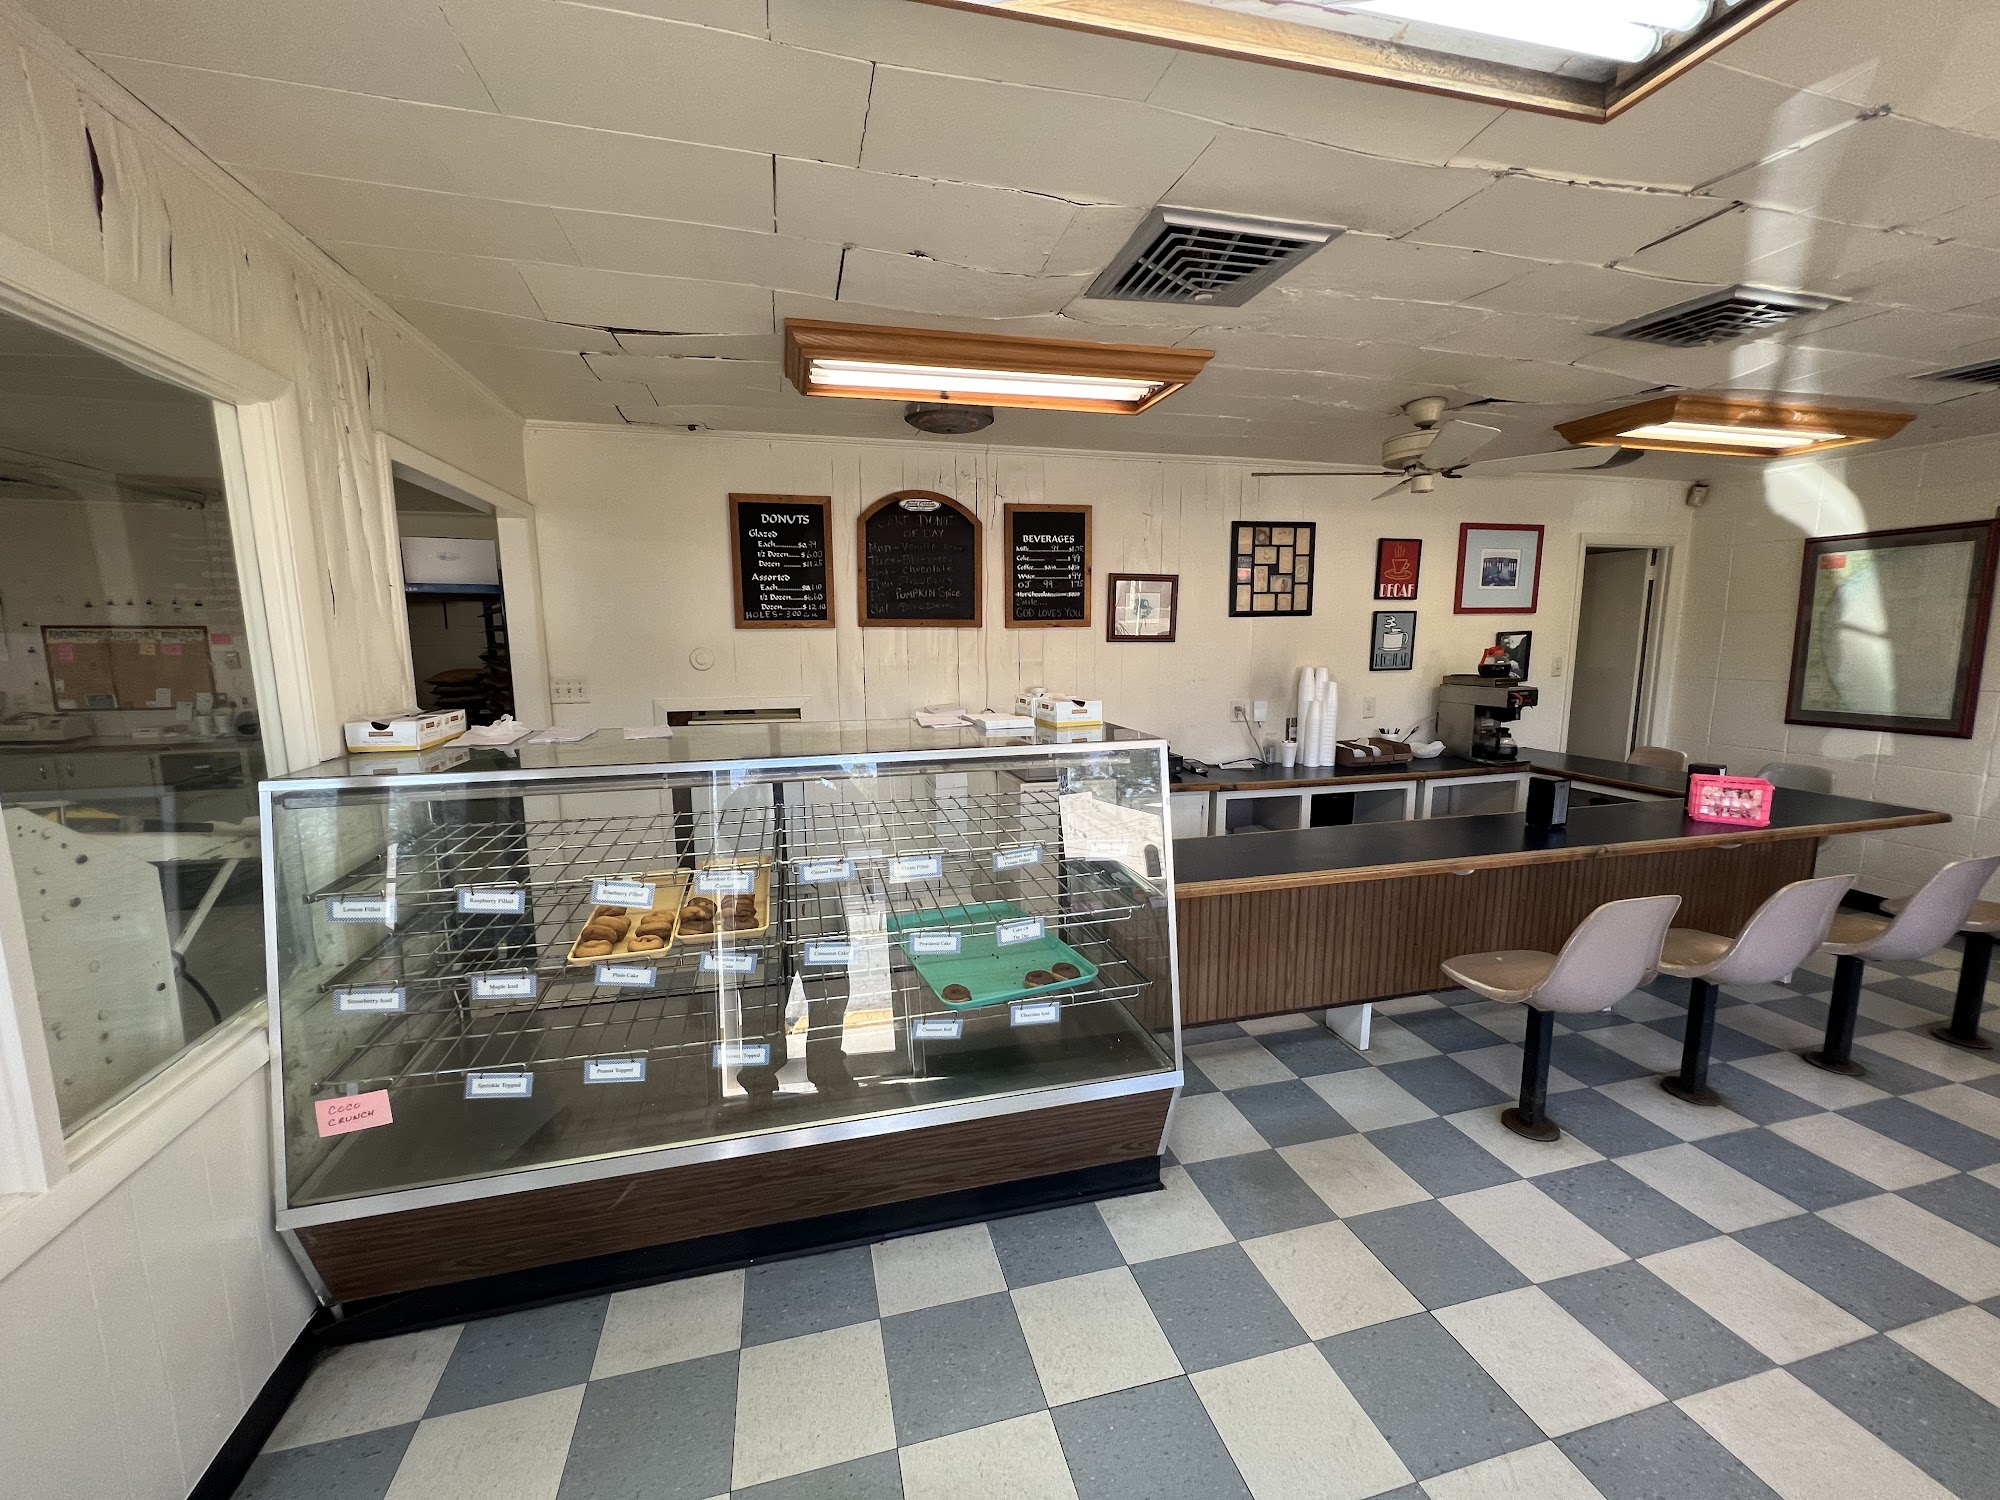 Dixie Cream Donut Shop